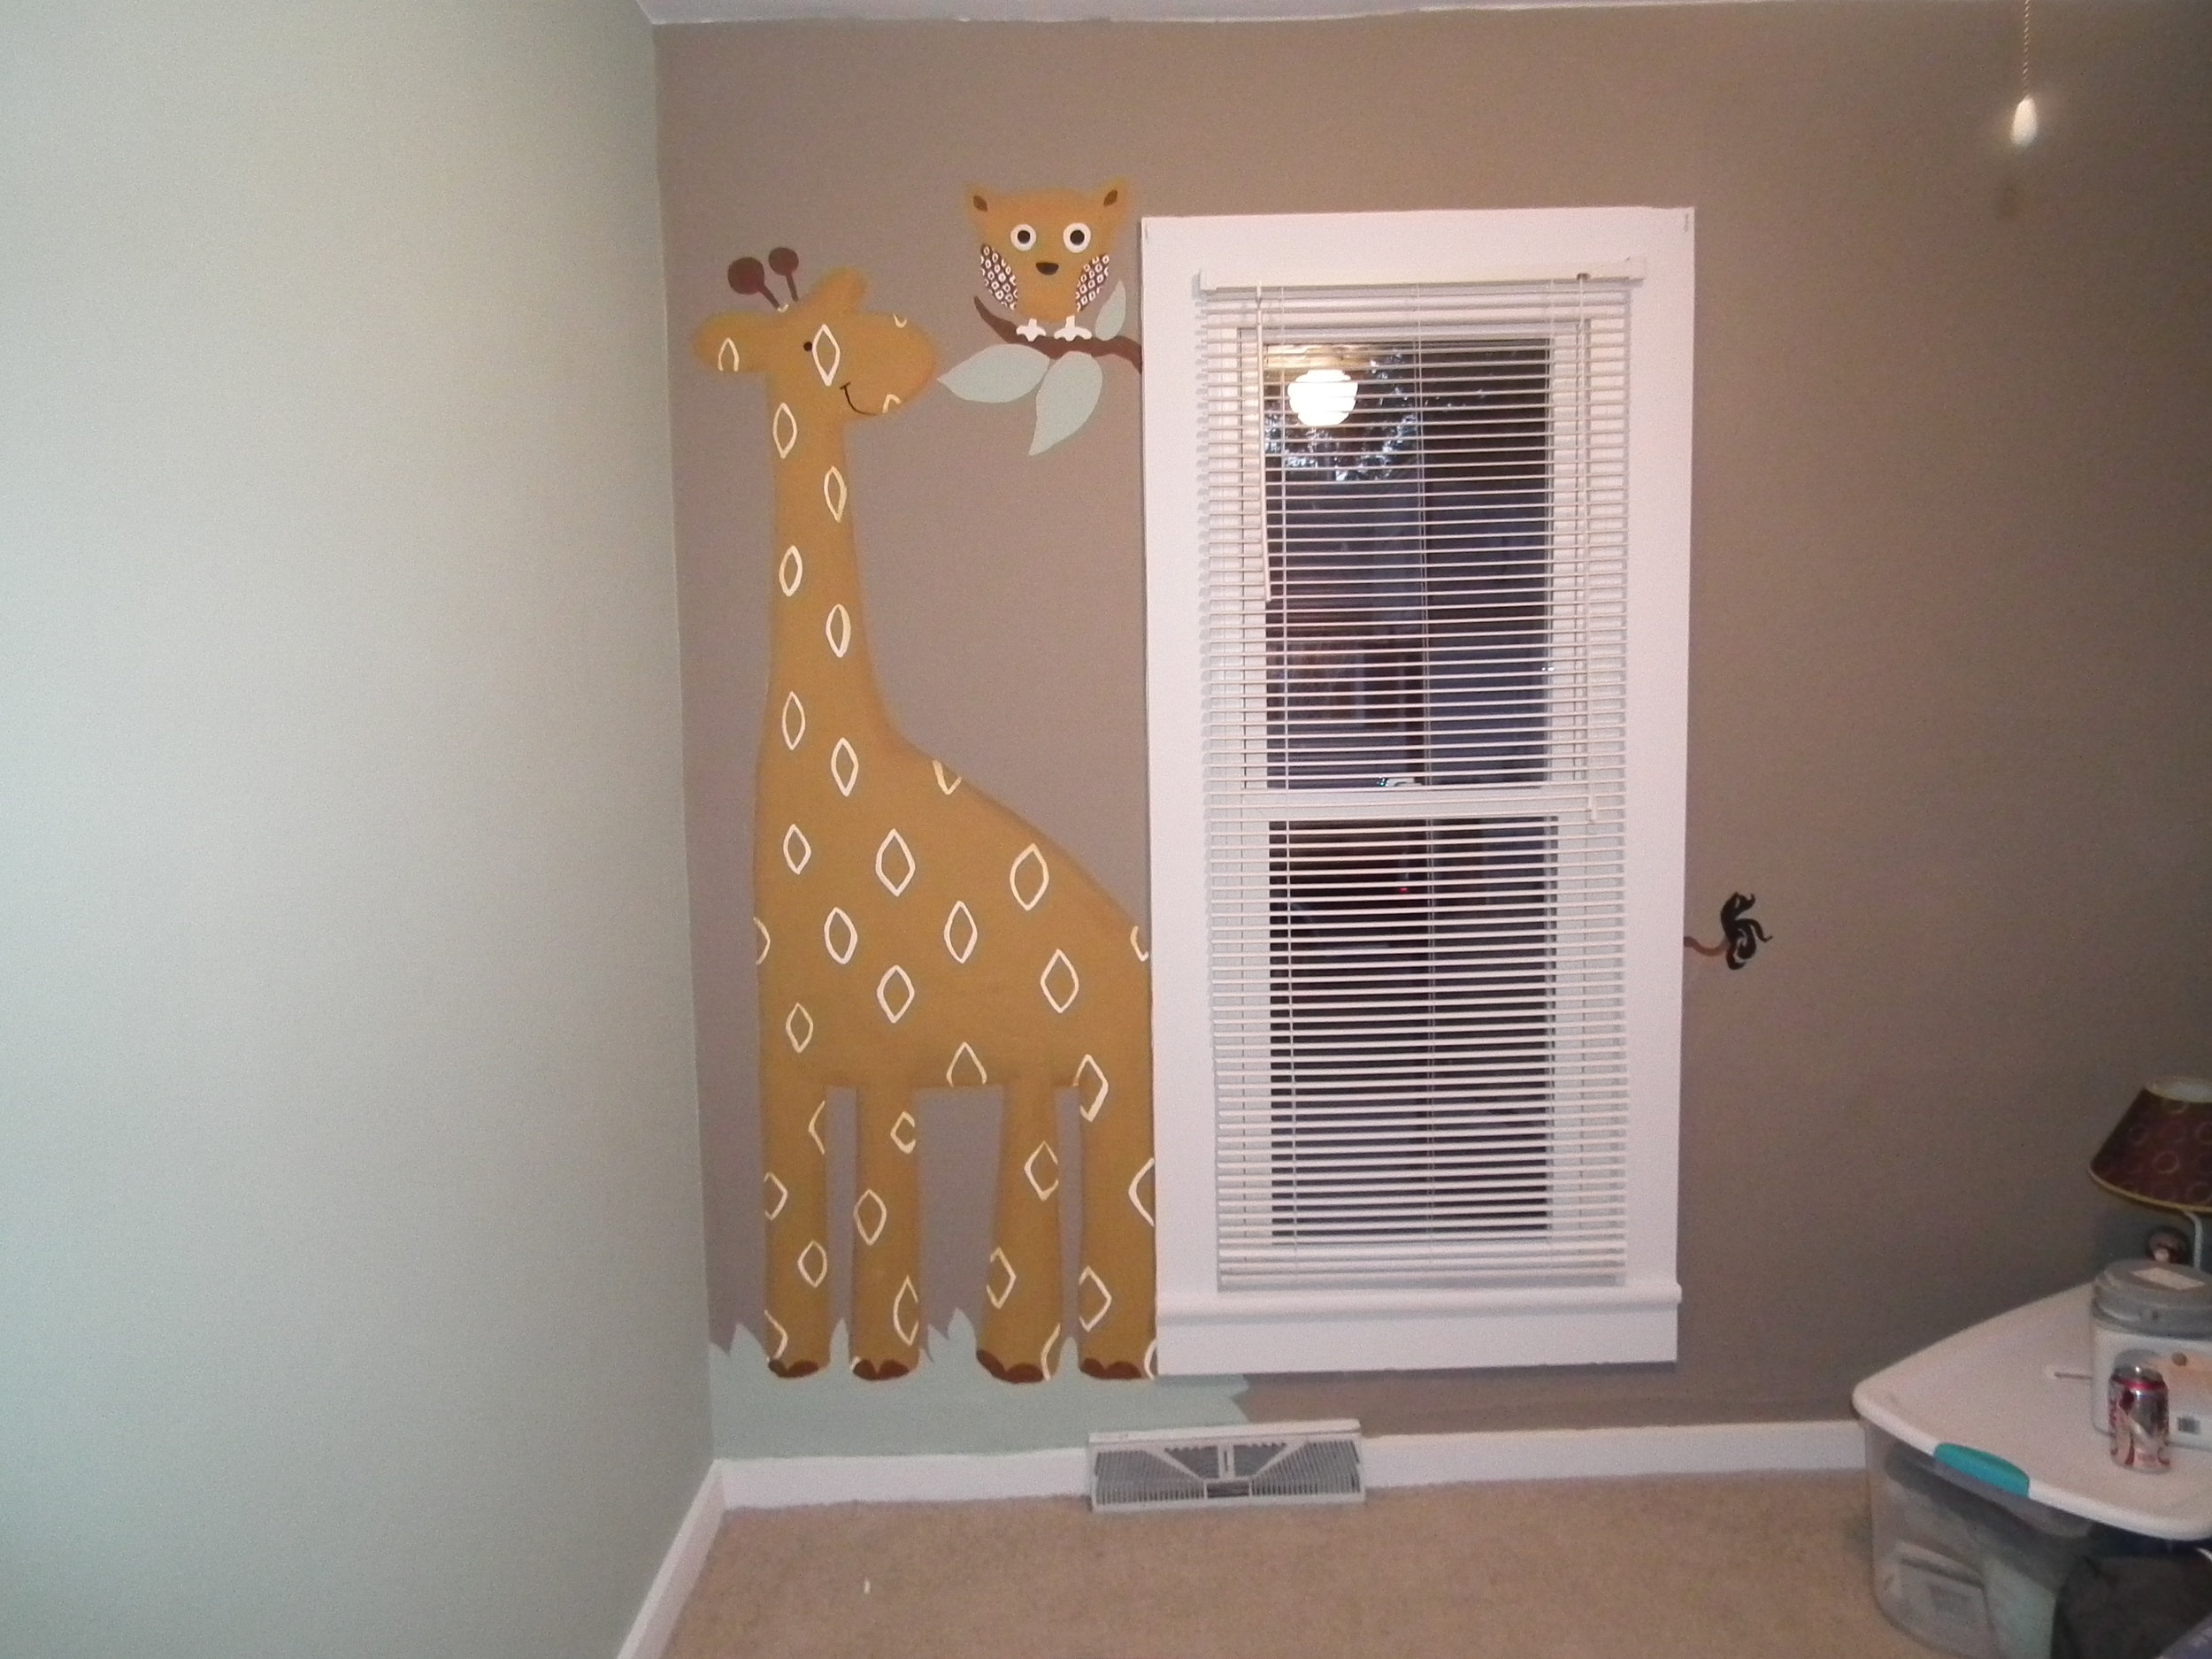 giraffe mural.JPG